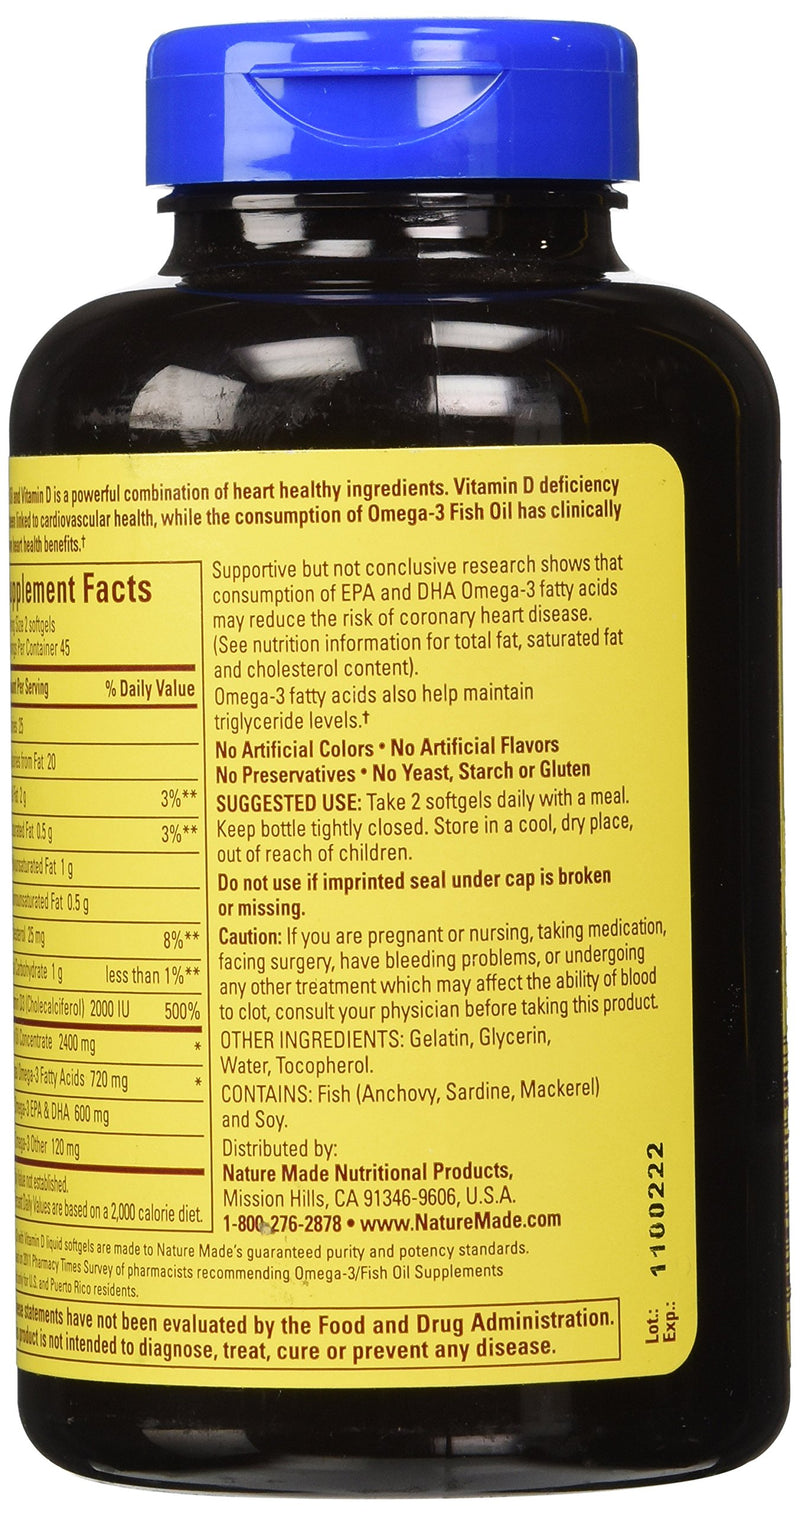 Nature Made Fish Oil 1,200 mg + VIT D 1,000 IU Softgels, 90 ct - BeesActive Australia